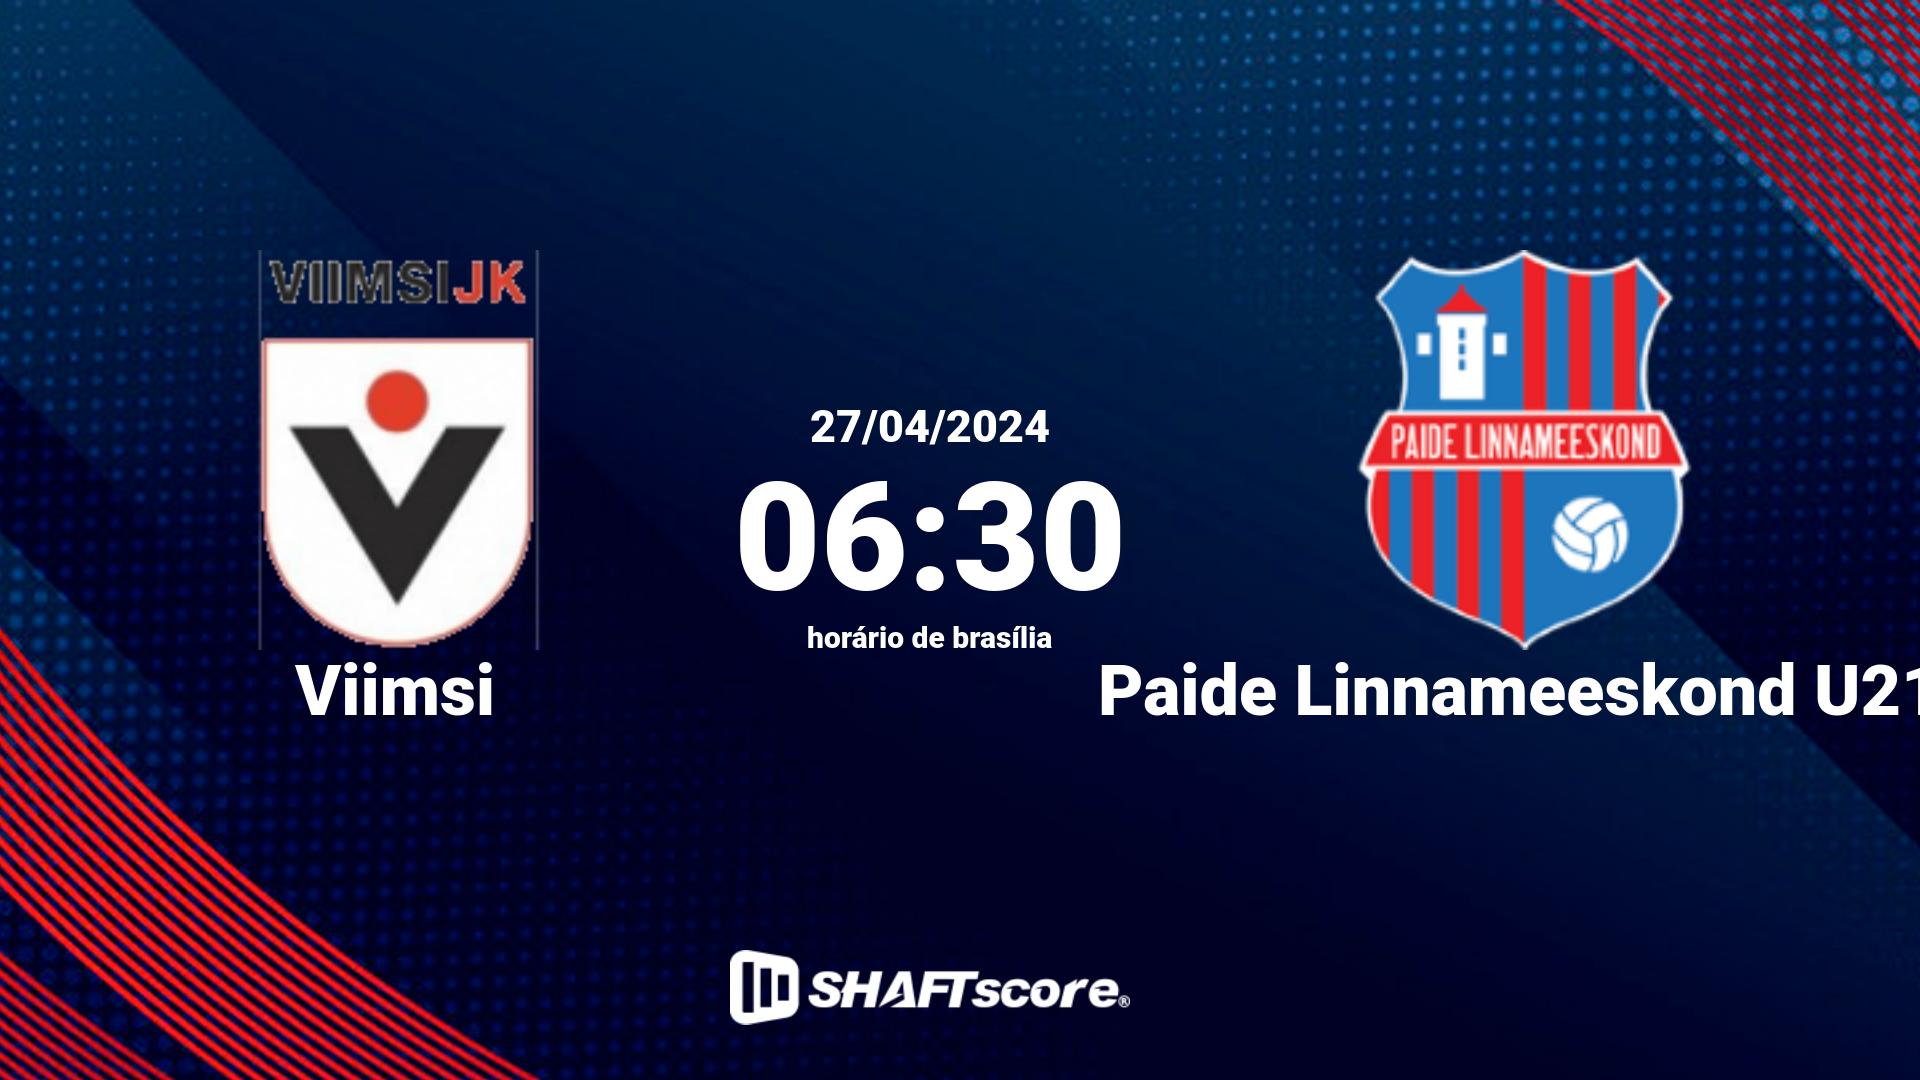 Estatísticas do jogo Viimsi vs Paide Linnameeskond U21 27.04 06:30